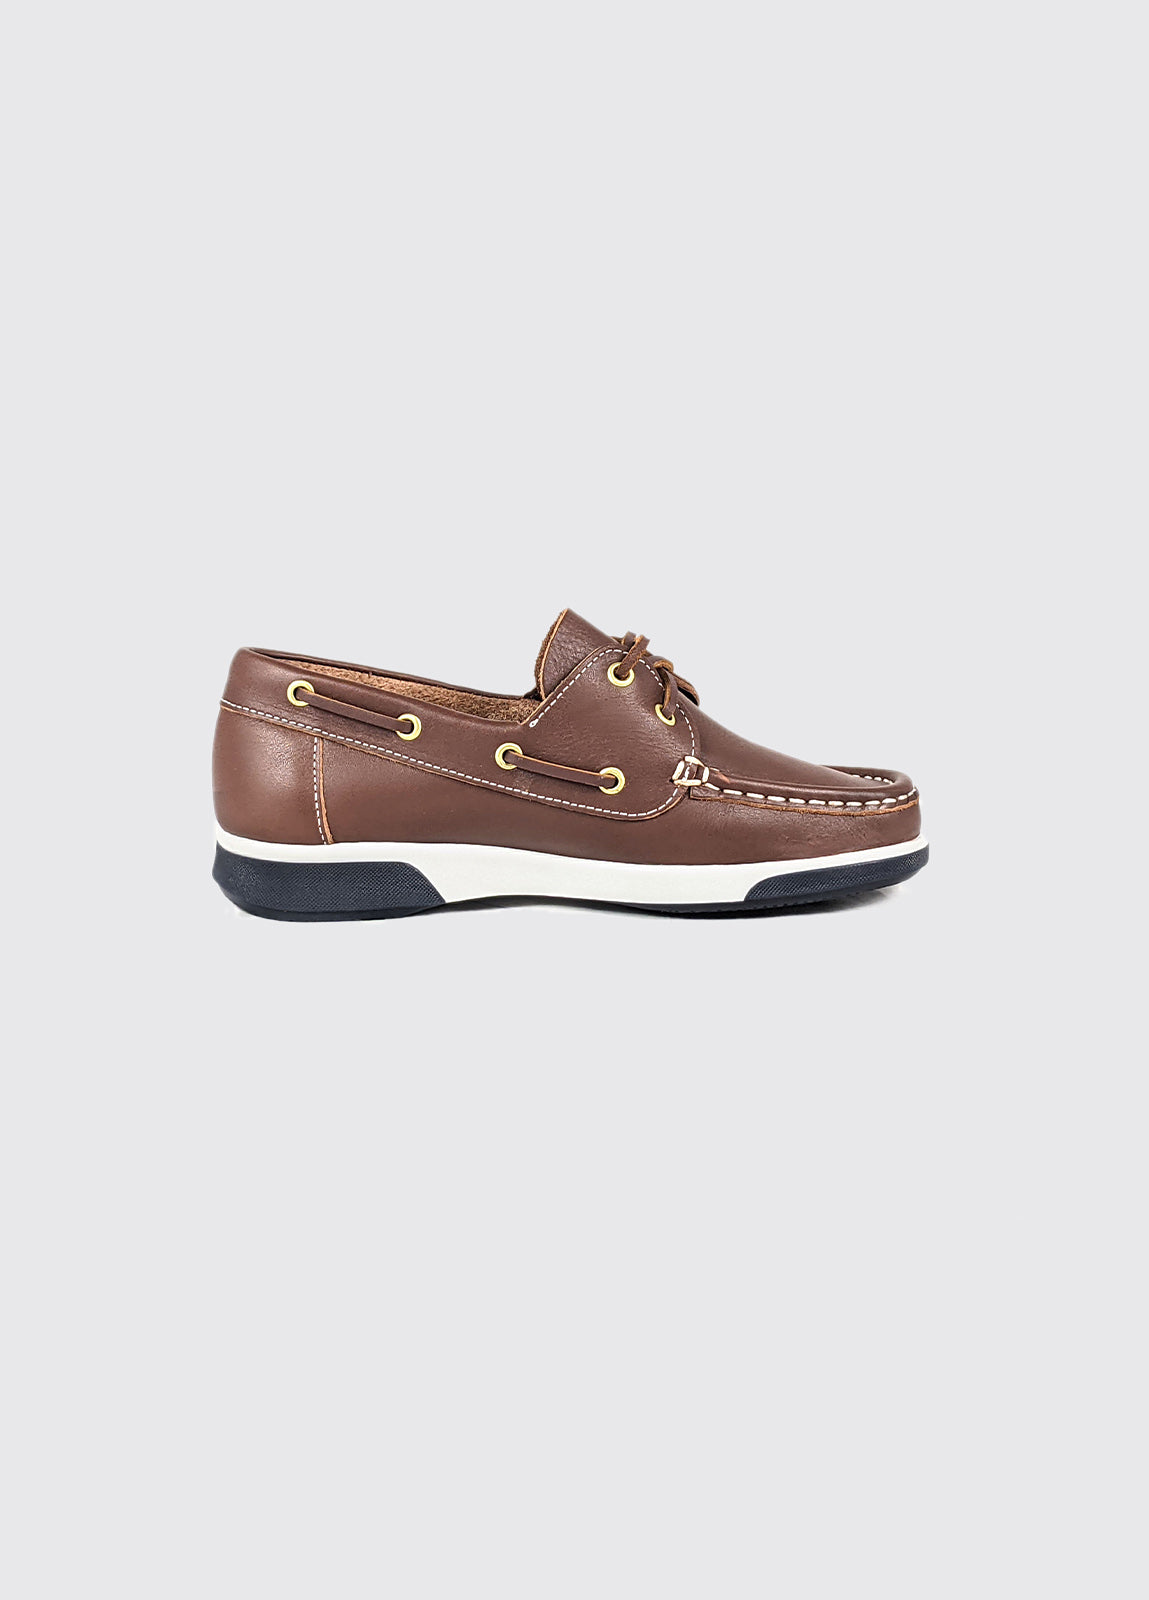 Kapley: Comfortable & Durable Brown Deck School Shoes